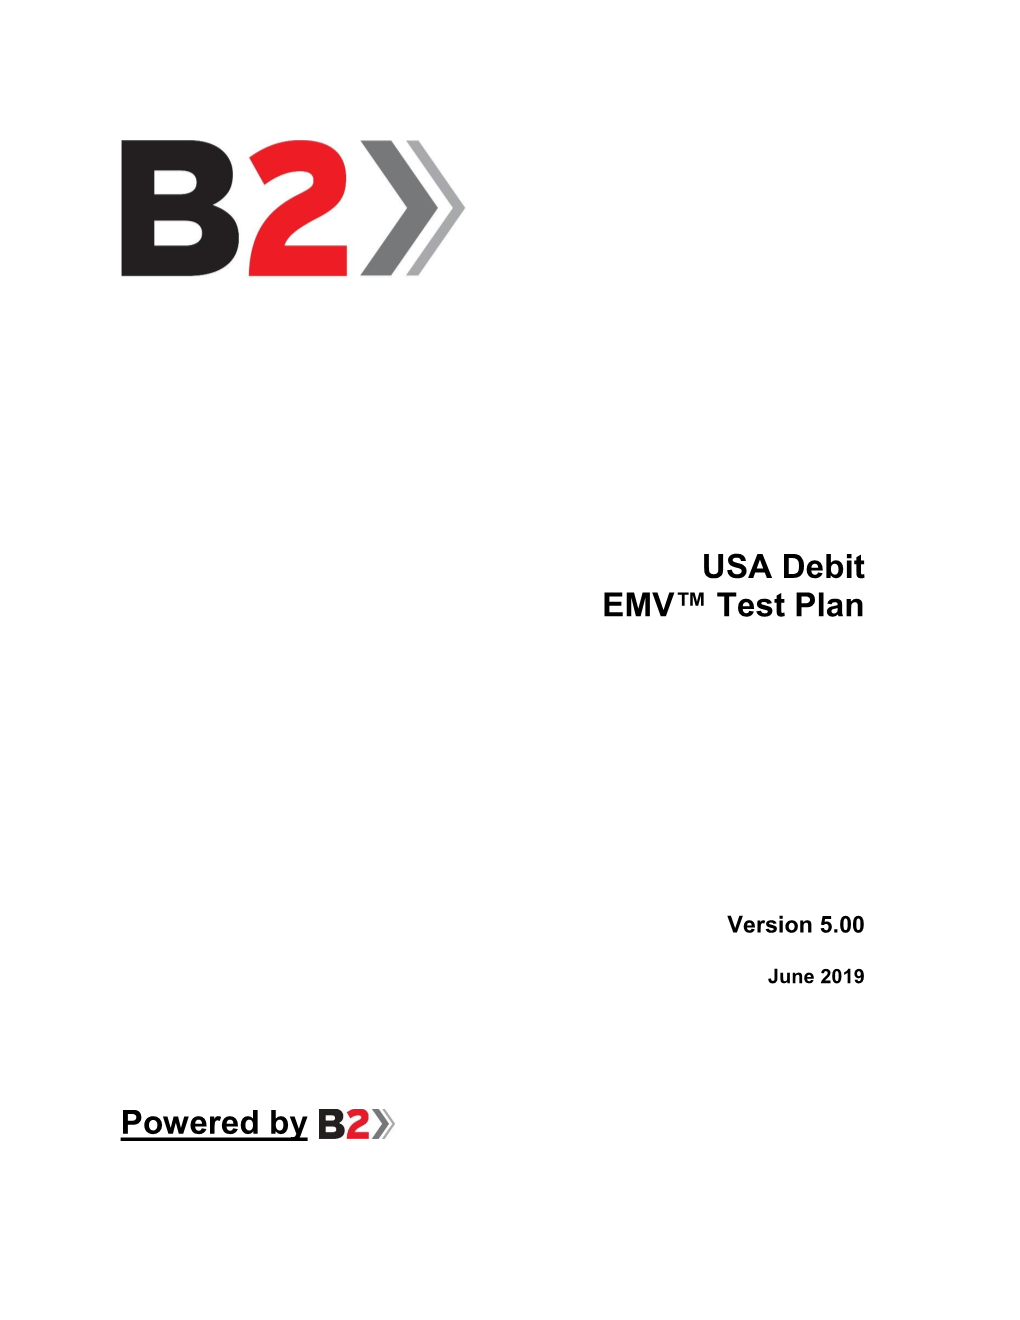 USA Debit EMV™ Test Plan Powered By